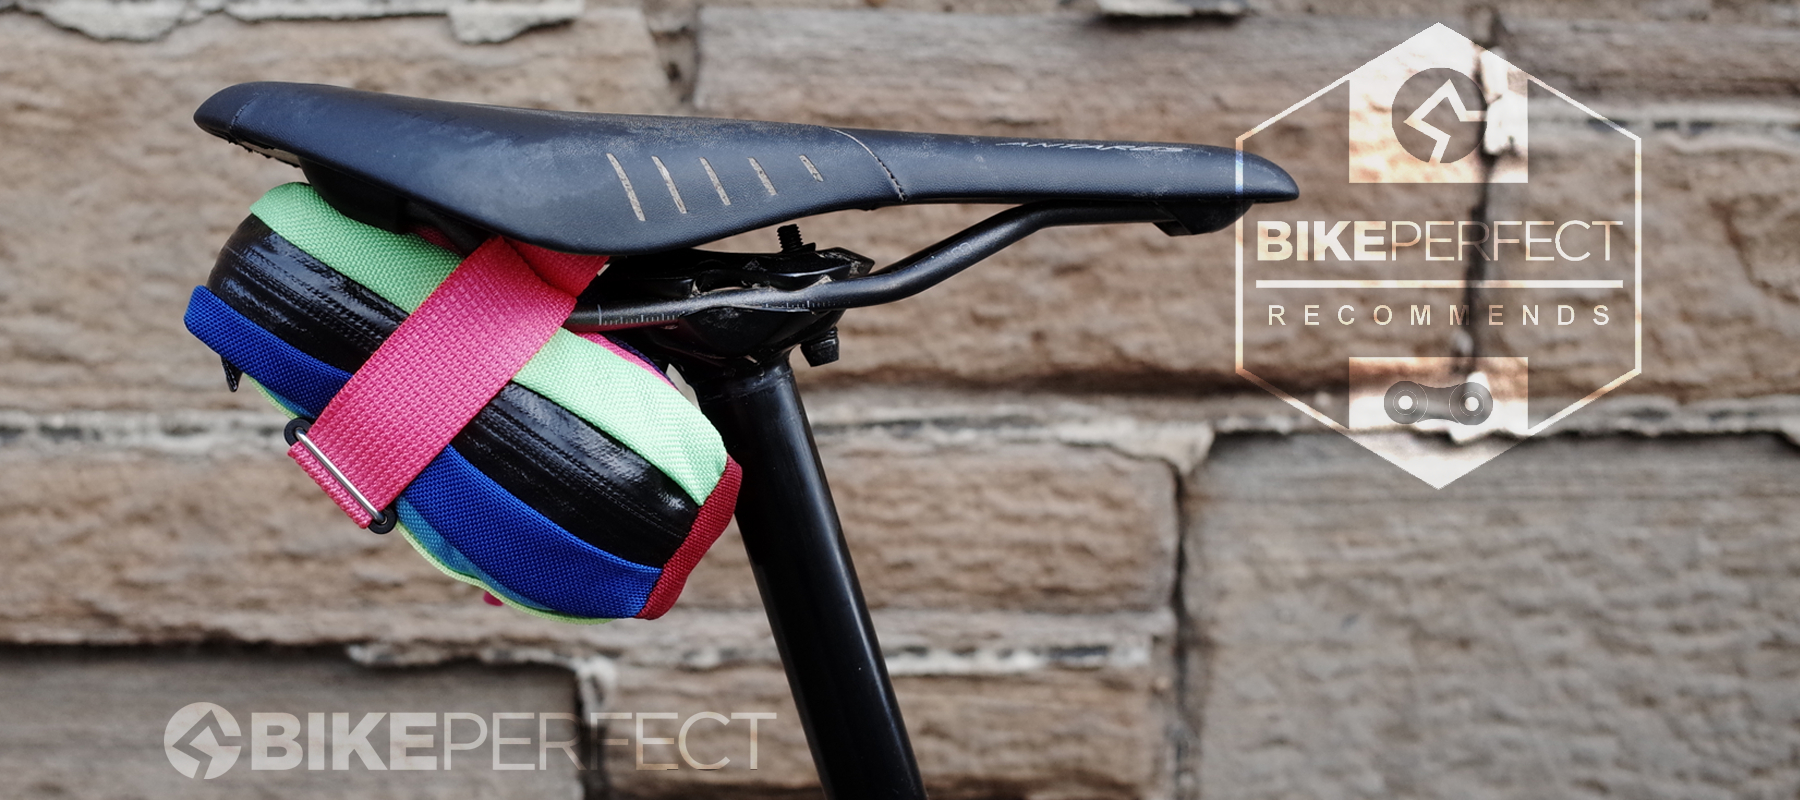 AccLoo Bicycle Frame Bag, Bike Frame Bag Waterproof Bike Pouch Bag Bike  Handlebar Bag Cycling Front Top Tube Touchscreen Phone Mount for iPhone  Samsung Huawei Smartphone up to 6.5'' price in Saudi